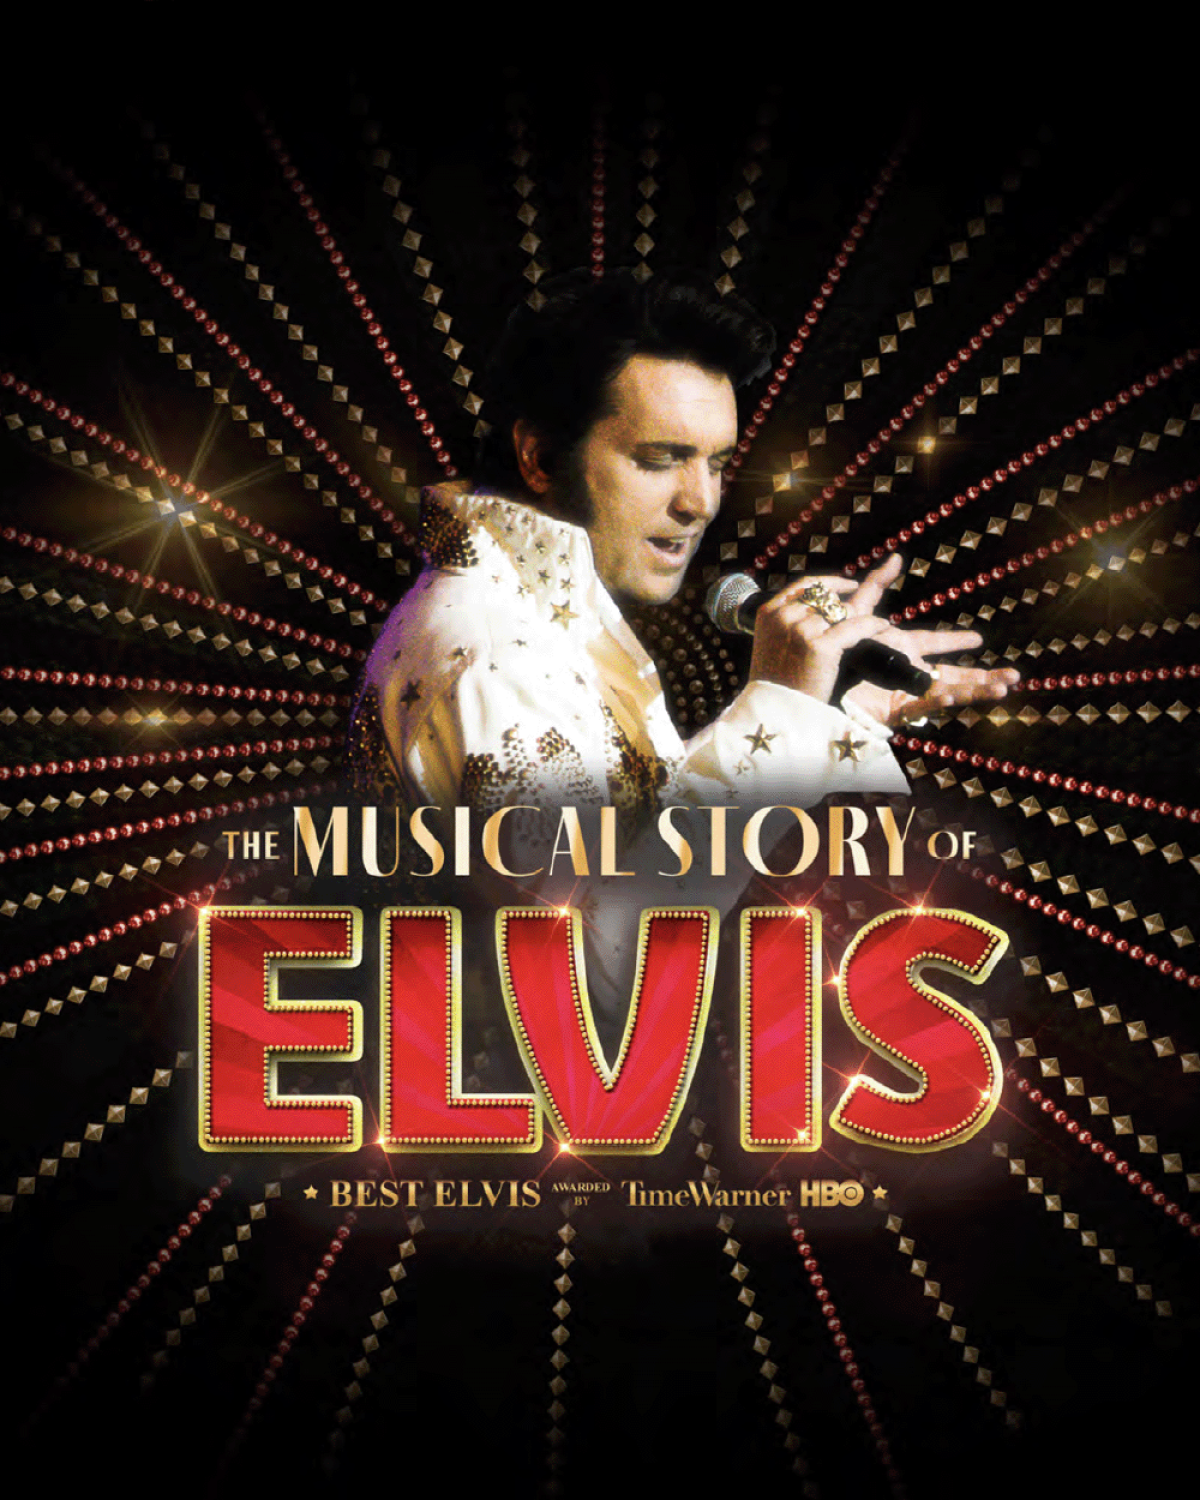 The Musical Story of Elvis at Palais Des Congres De Tours Tickets